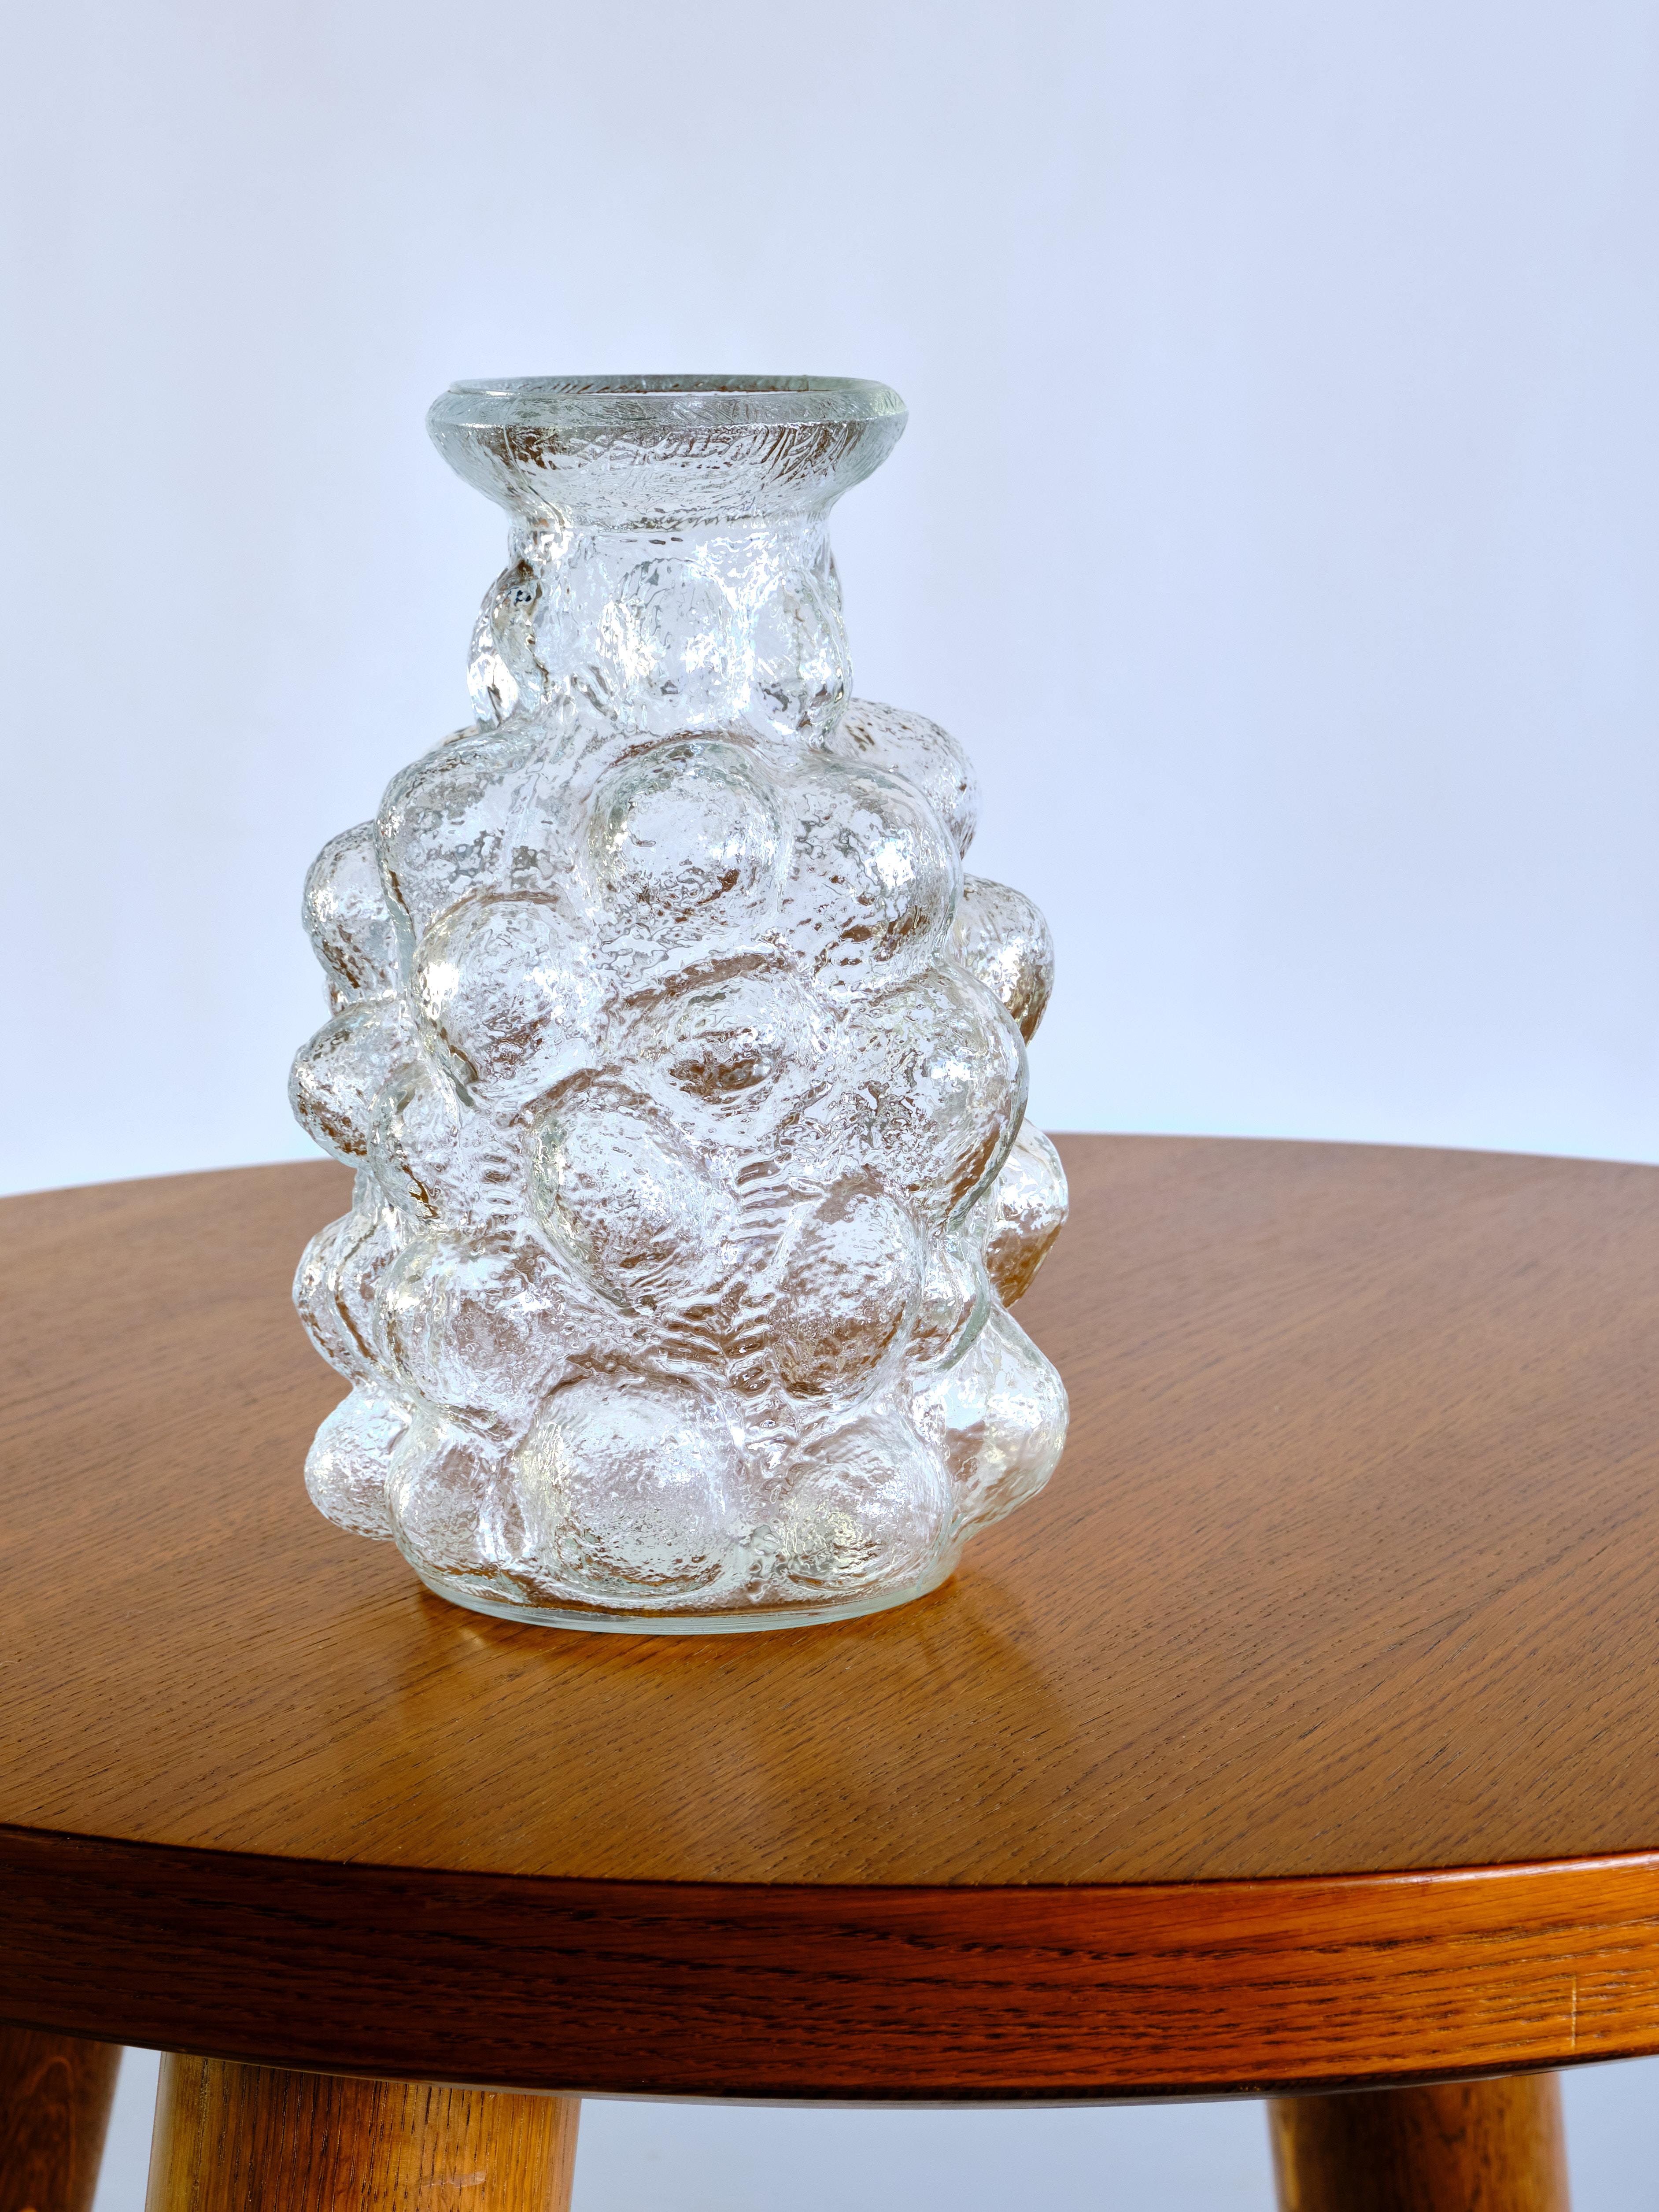 Helena Tynell & Heinrich Gantenbrink Bubble Glass Vase, Glashütte Limburg, 1960s For Sale 1